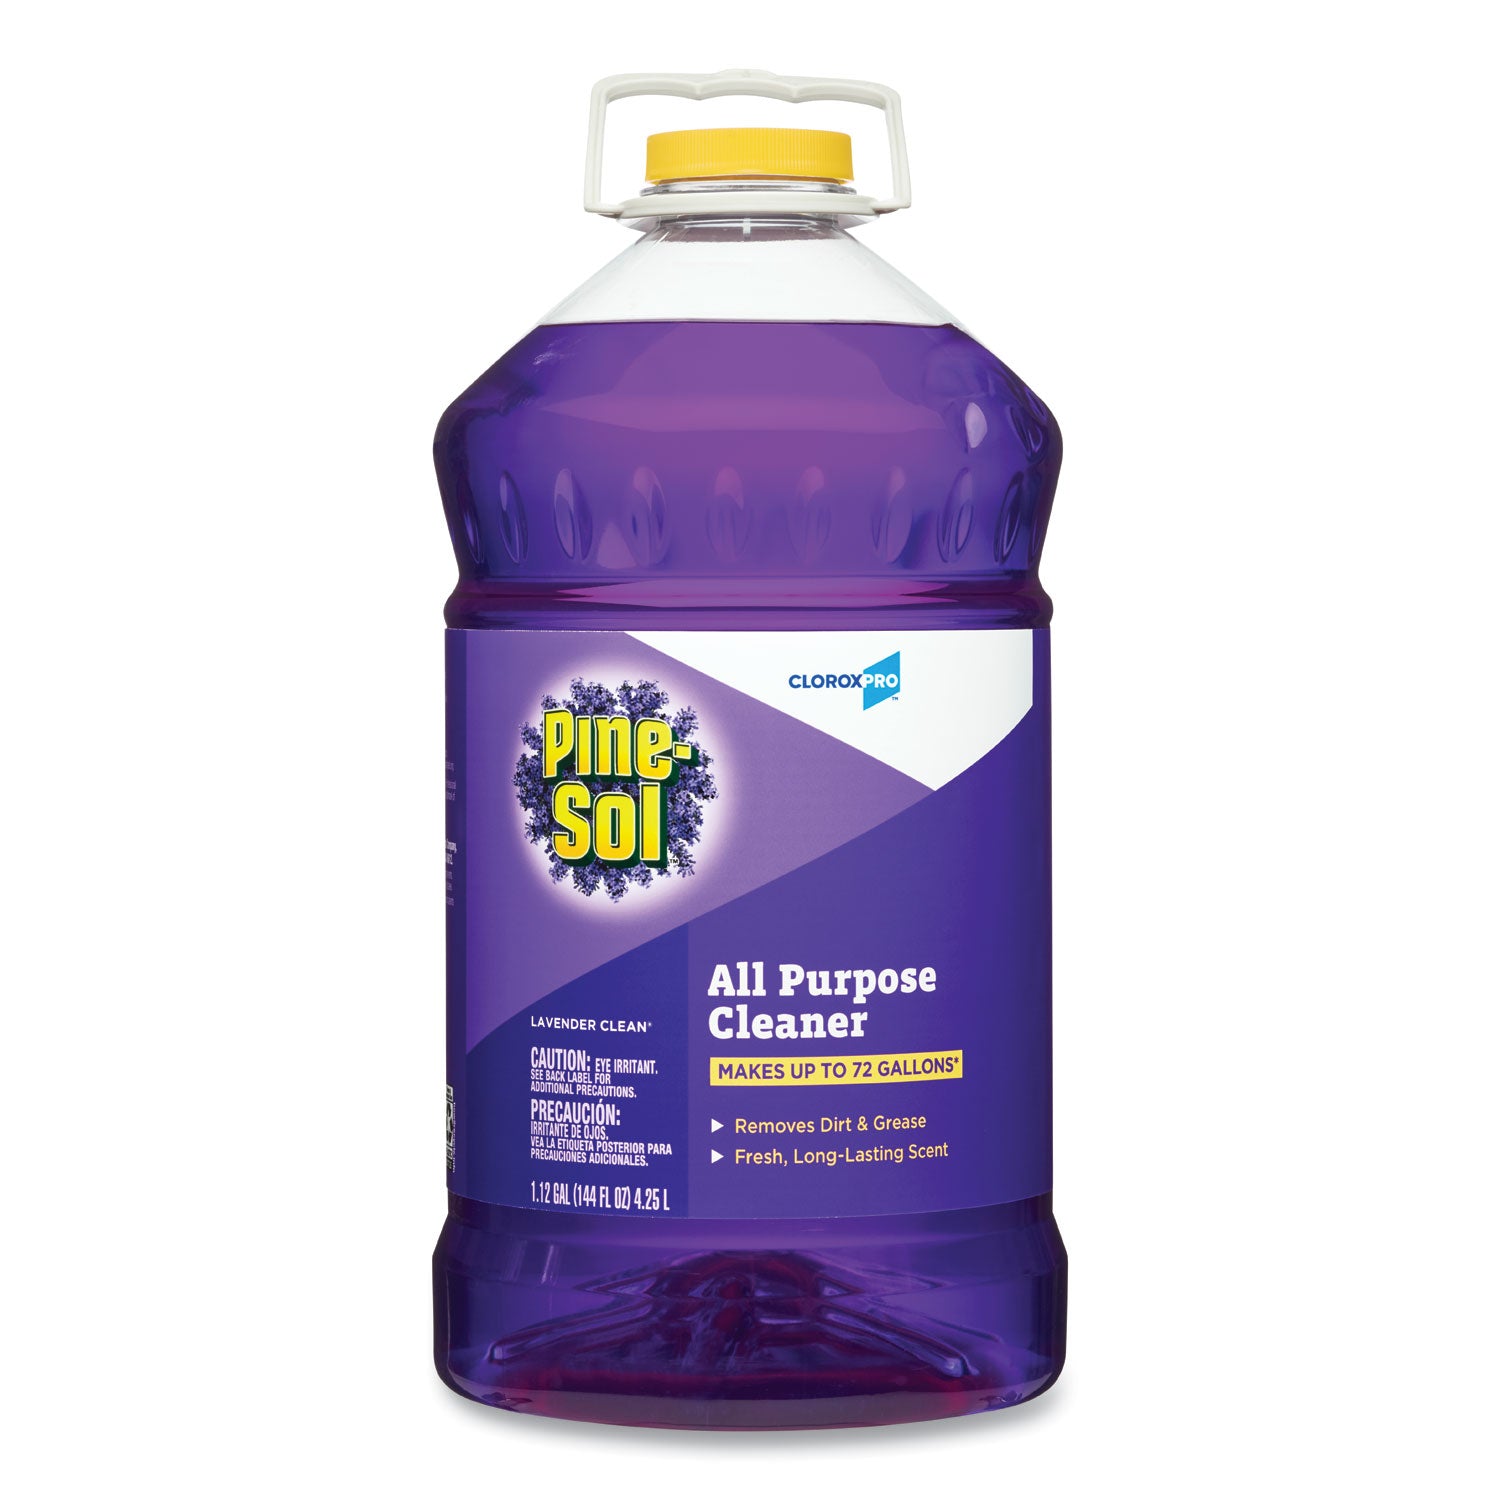 All Purpose Cleaner, Lavender Clean, 144 oz Bottle - 